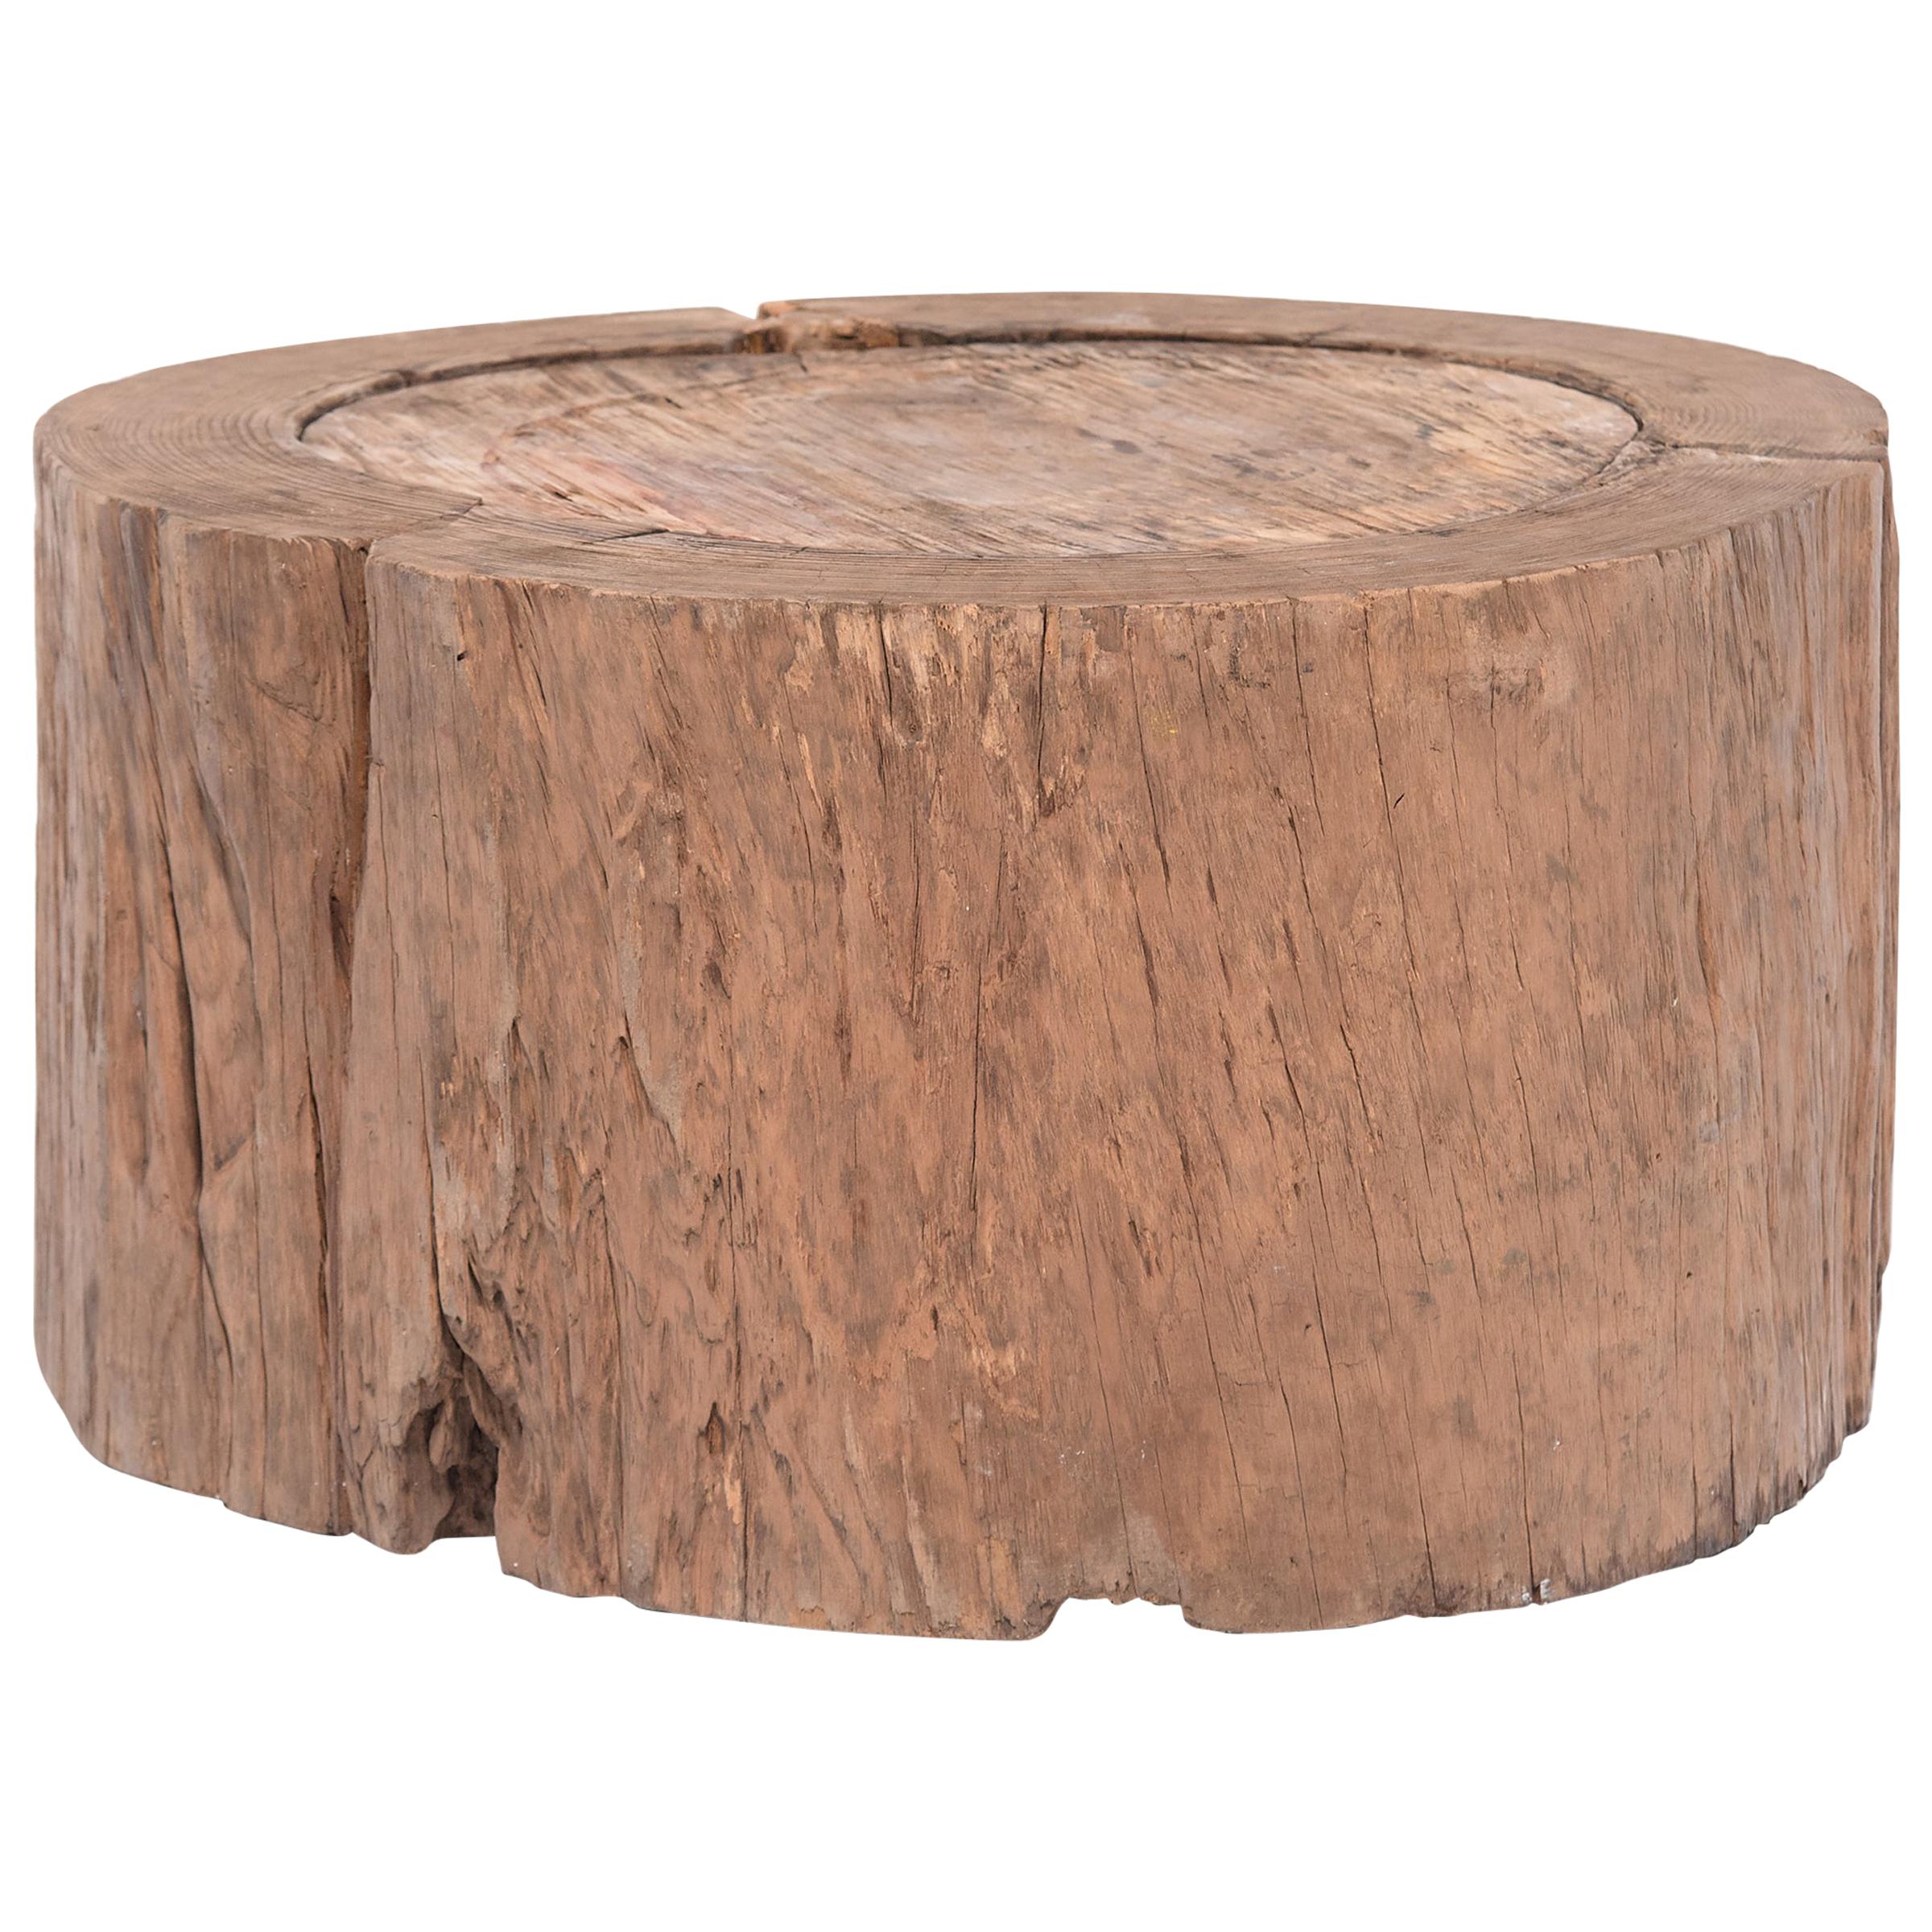 Round Organic Stump Table, circa 1850